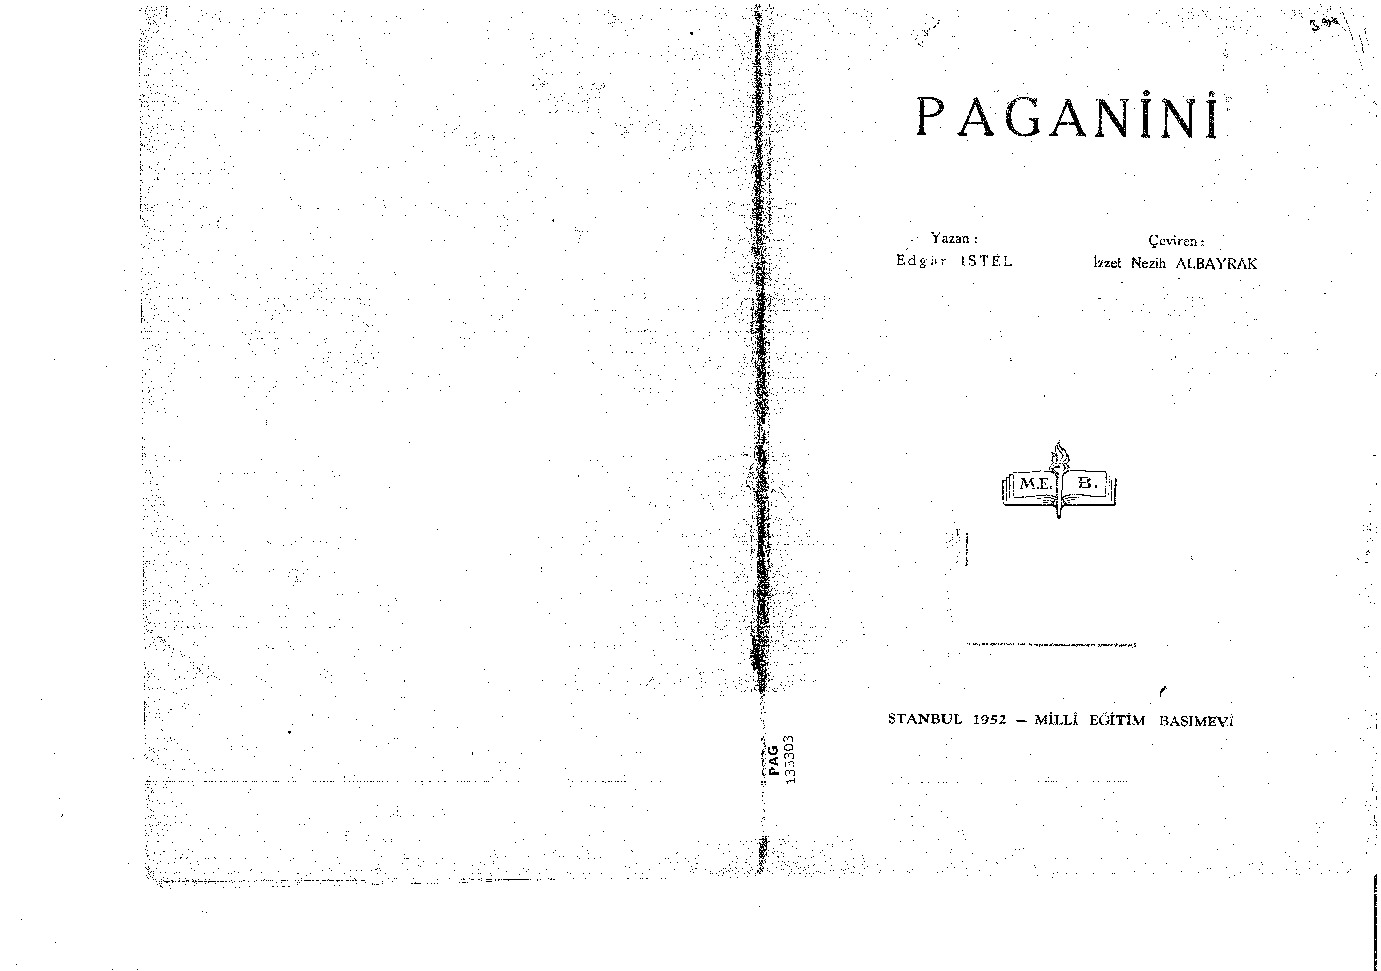 Paganini-Edgar Istel-Izzet Nezih Albayraq-1952-37s